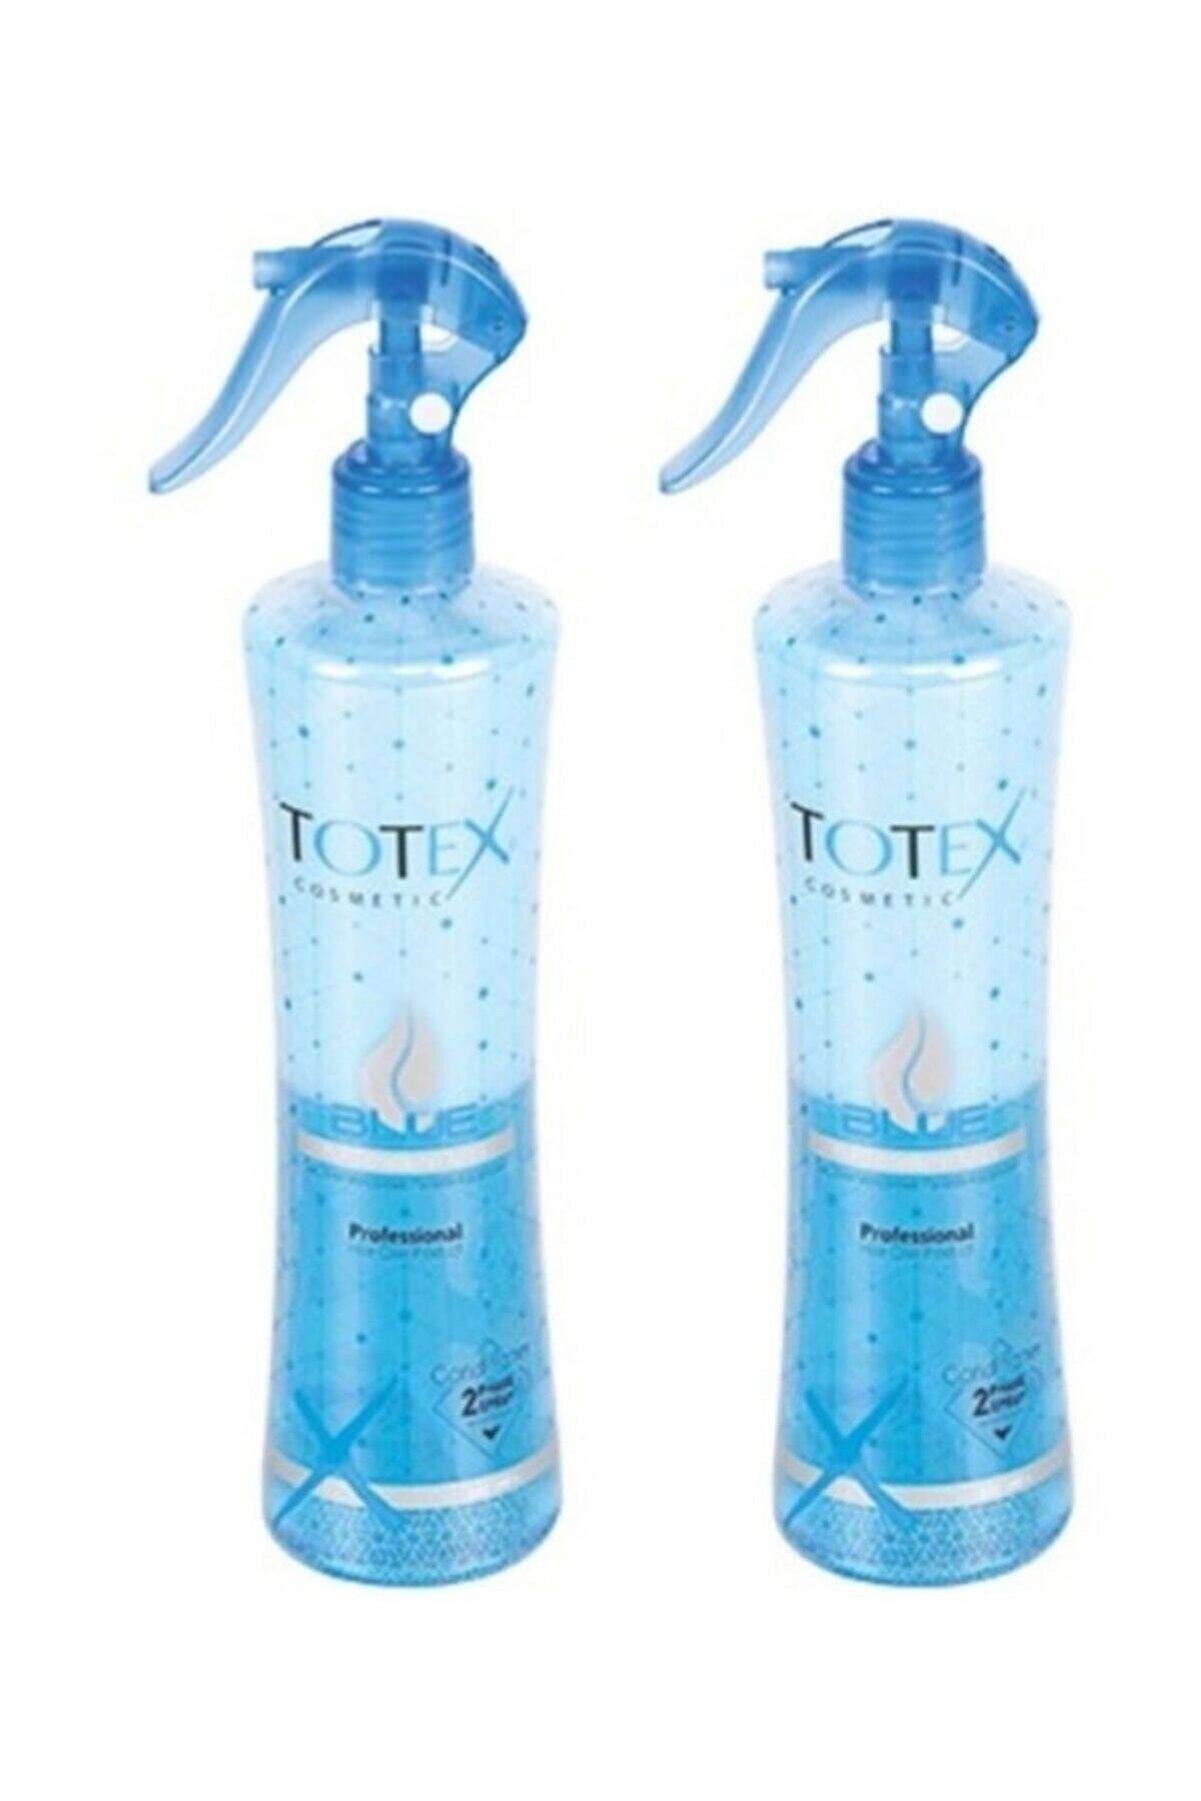 TOTEX Kuru Saçlar Için Çift Fazlı Mavi Fön Suyu 2 X 400 ml